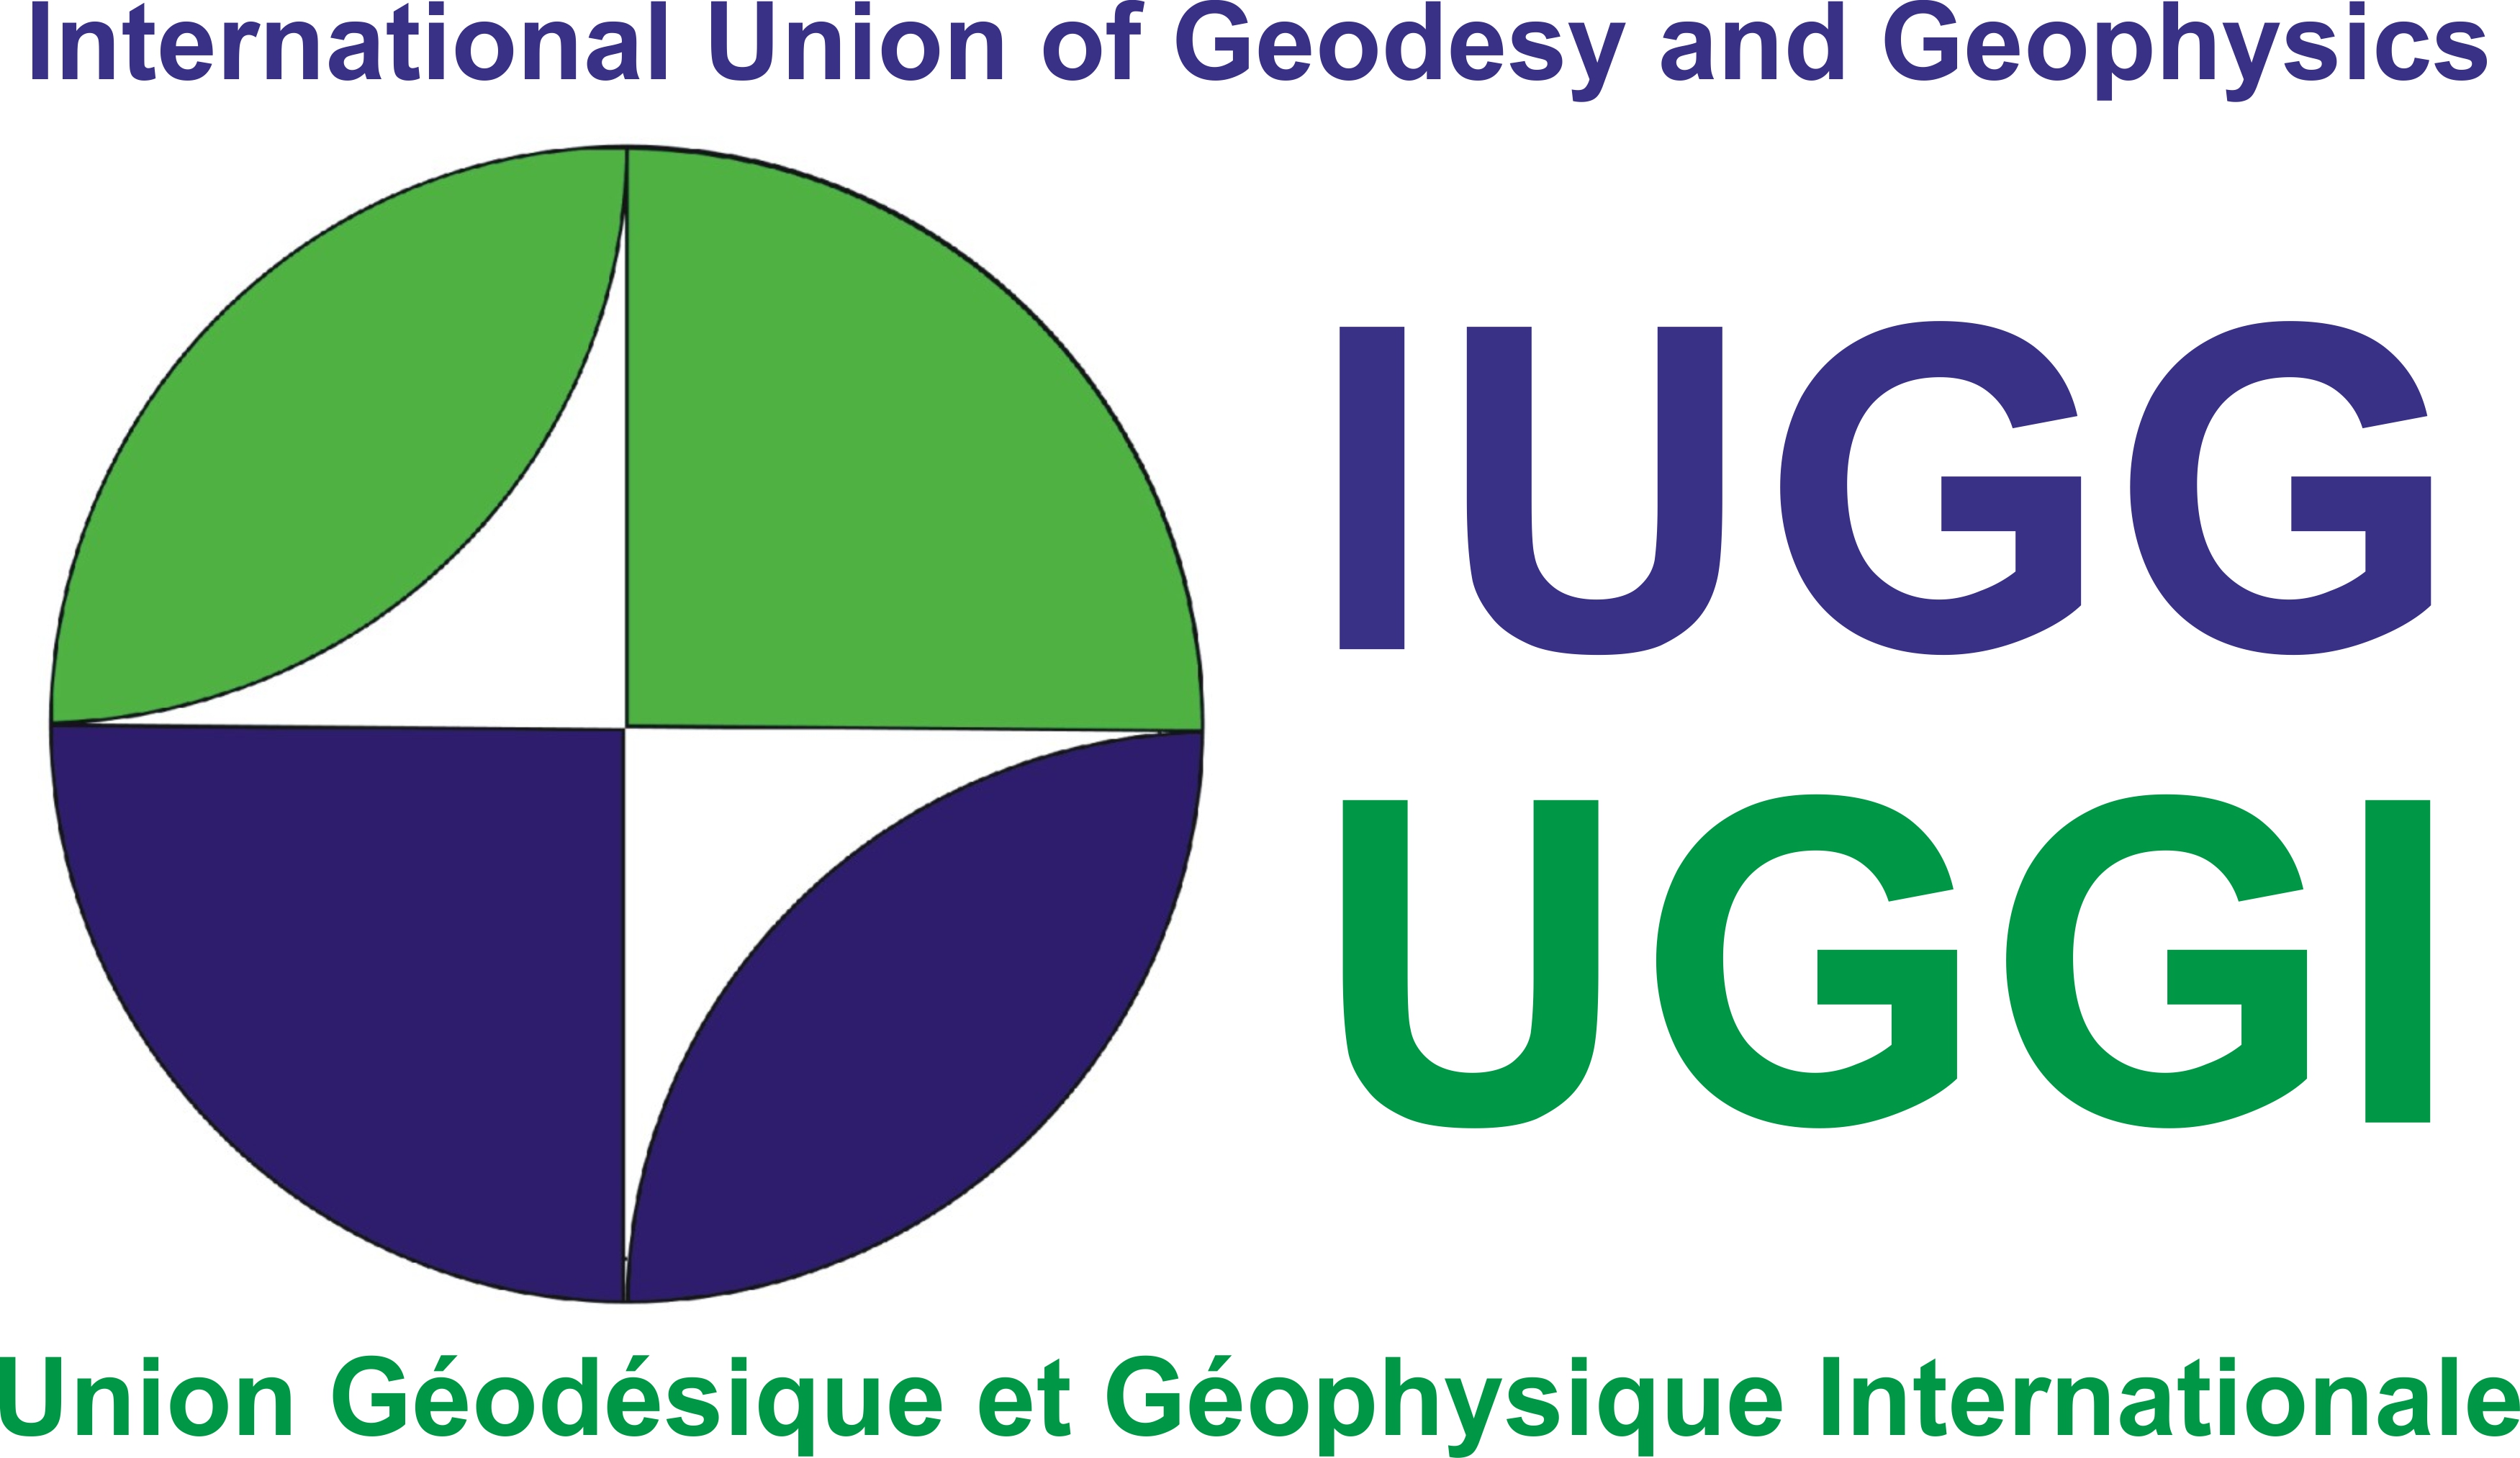 IUGG - International Union of Geodesy and Geophysics